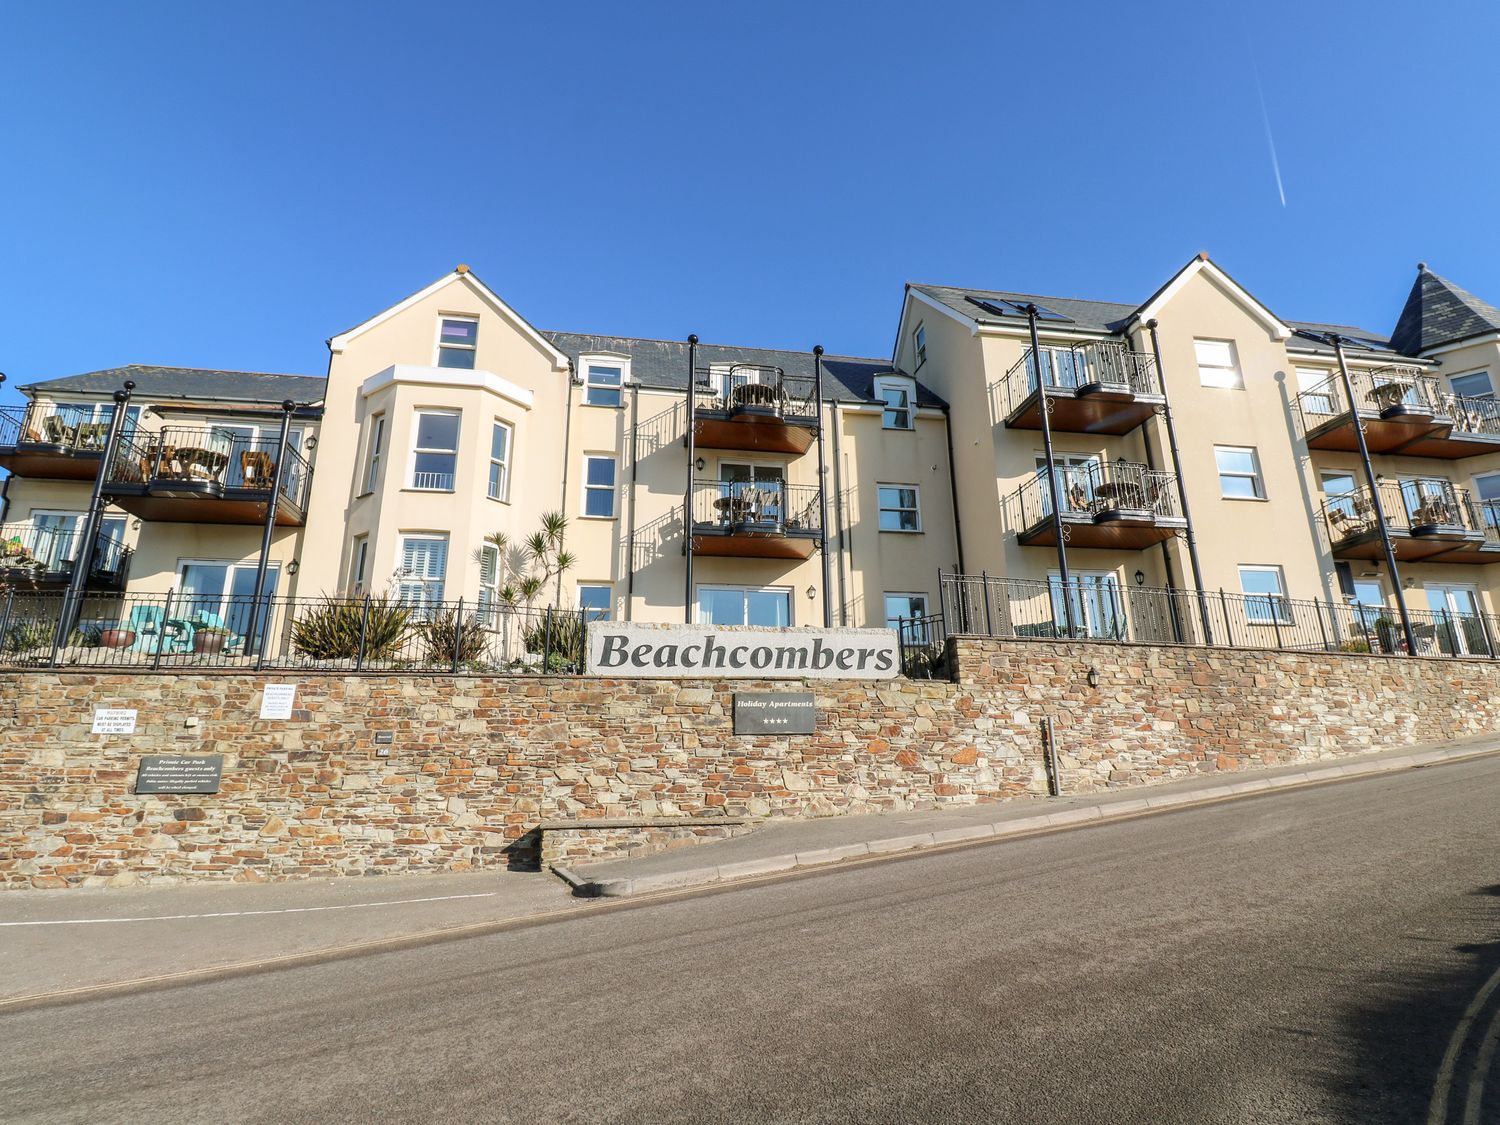 4 Beachcombers Apartments - Cornwall - 927396 - photo 1